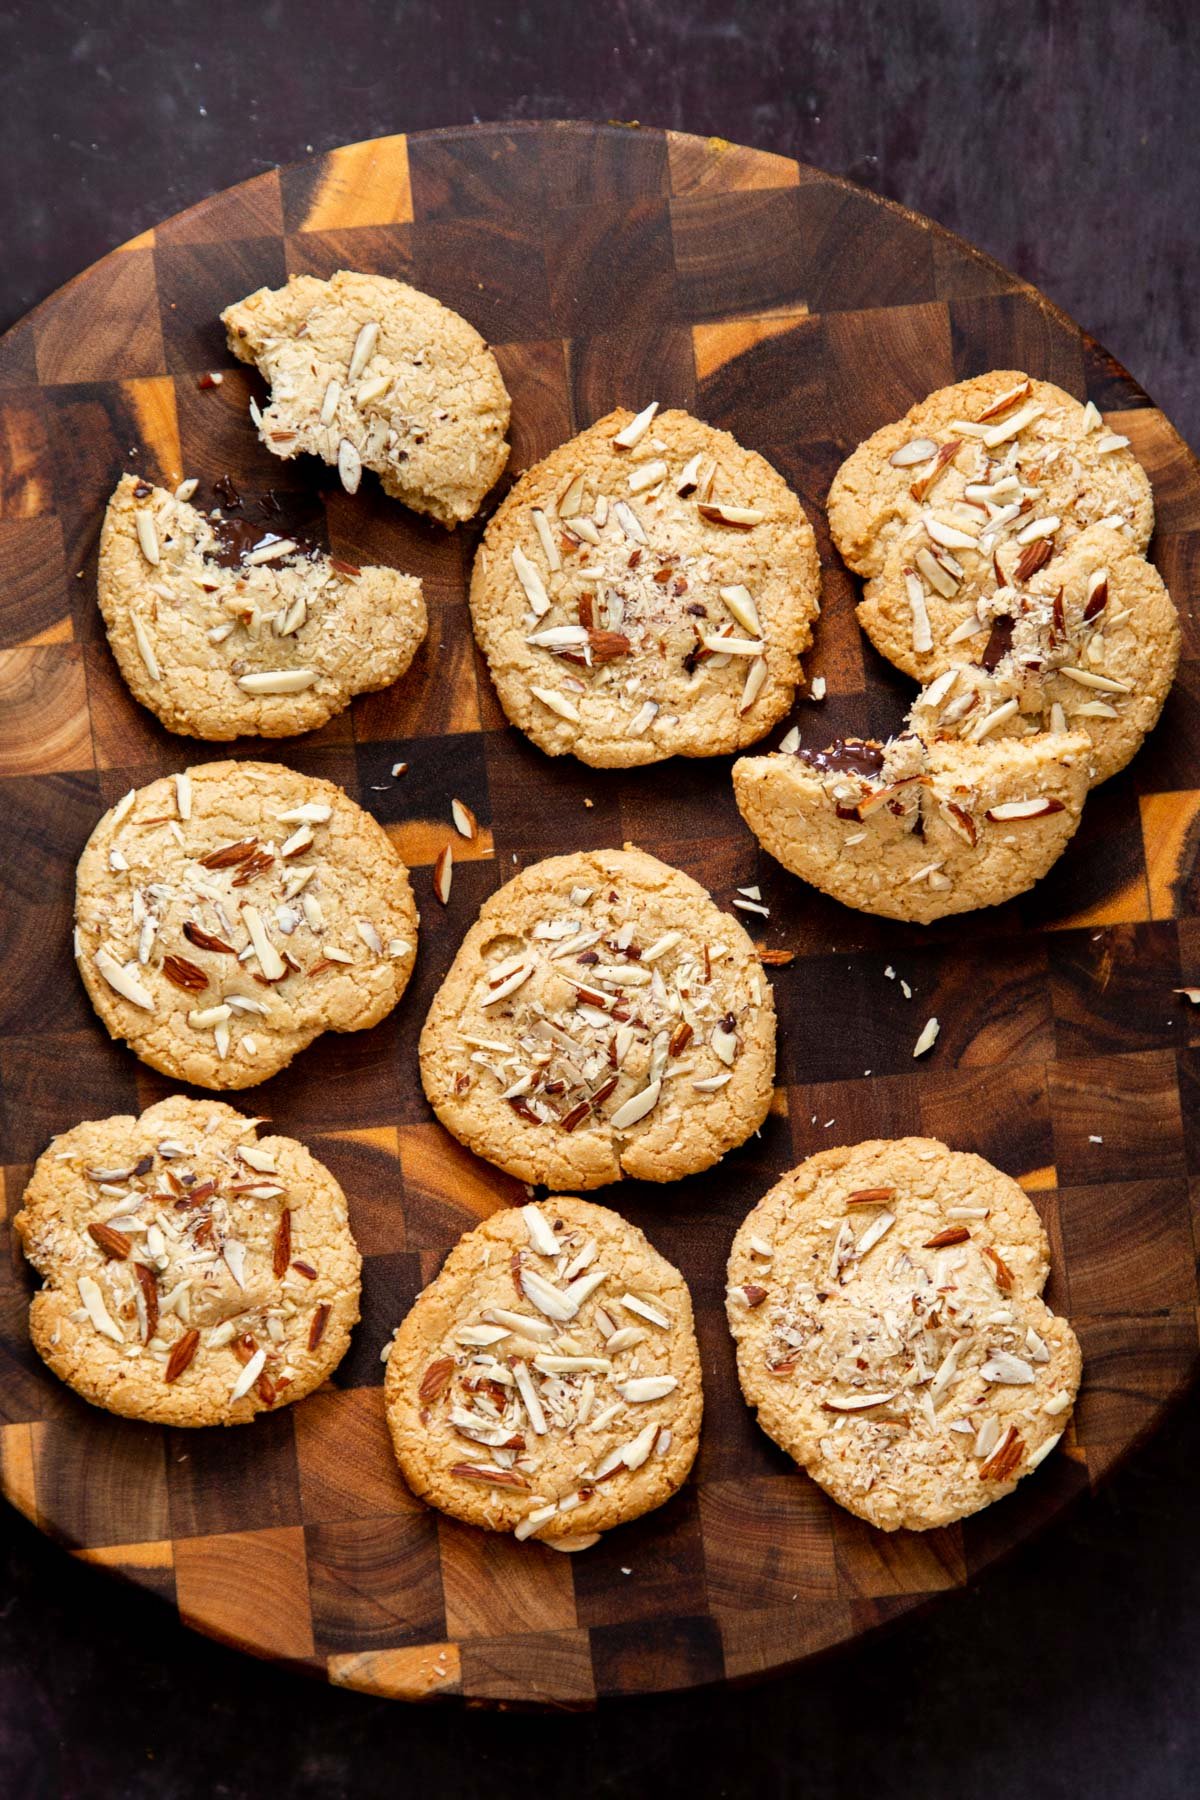 Almond Joy Cookies on a wooden chopping board